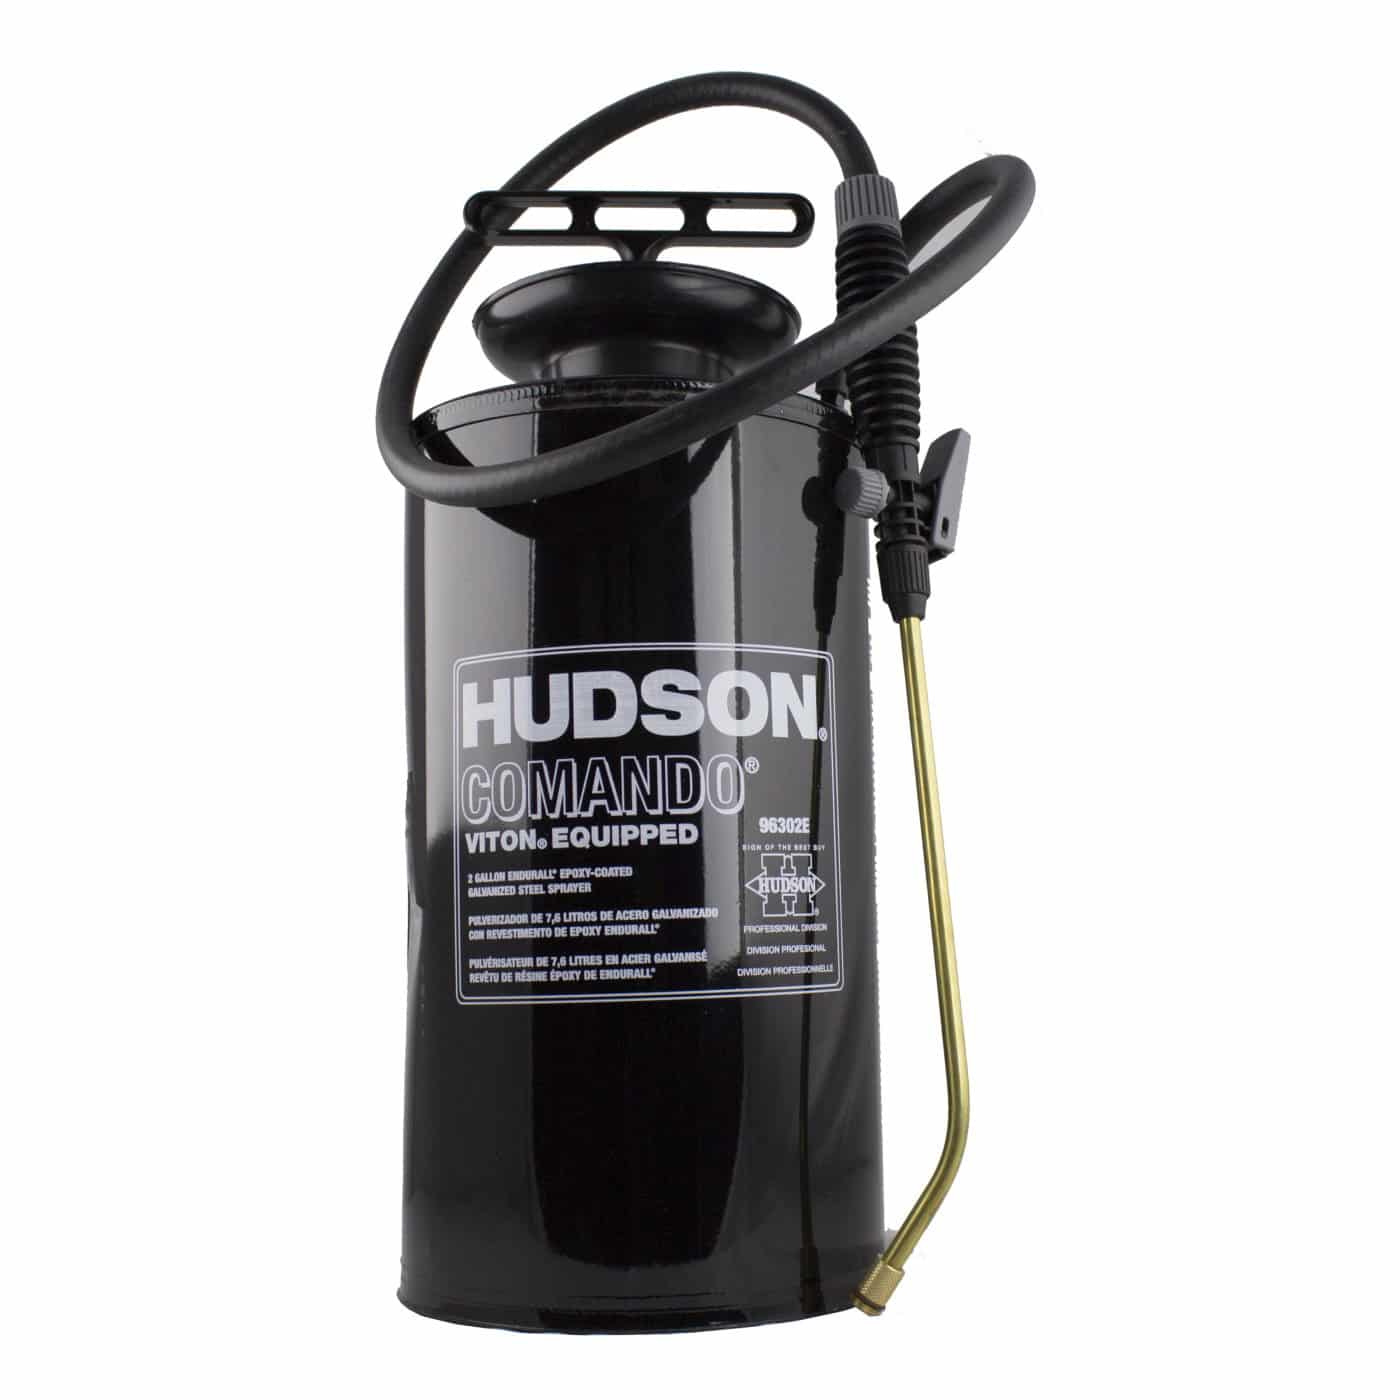 Hudson 96302E Comando 2 Gallon Sprayer Galvanized Steel